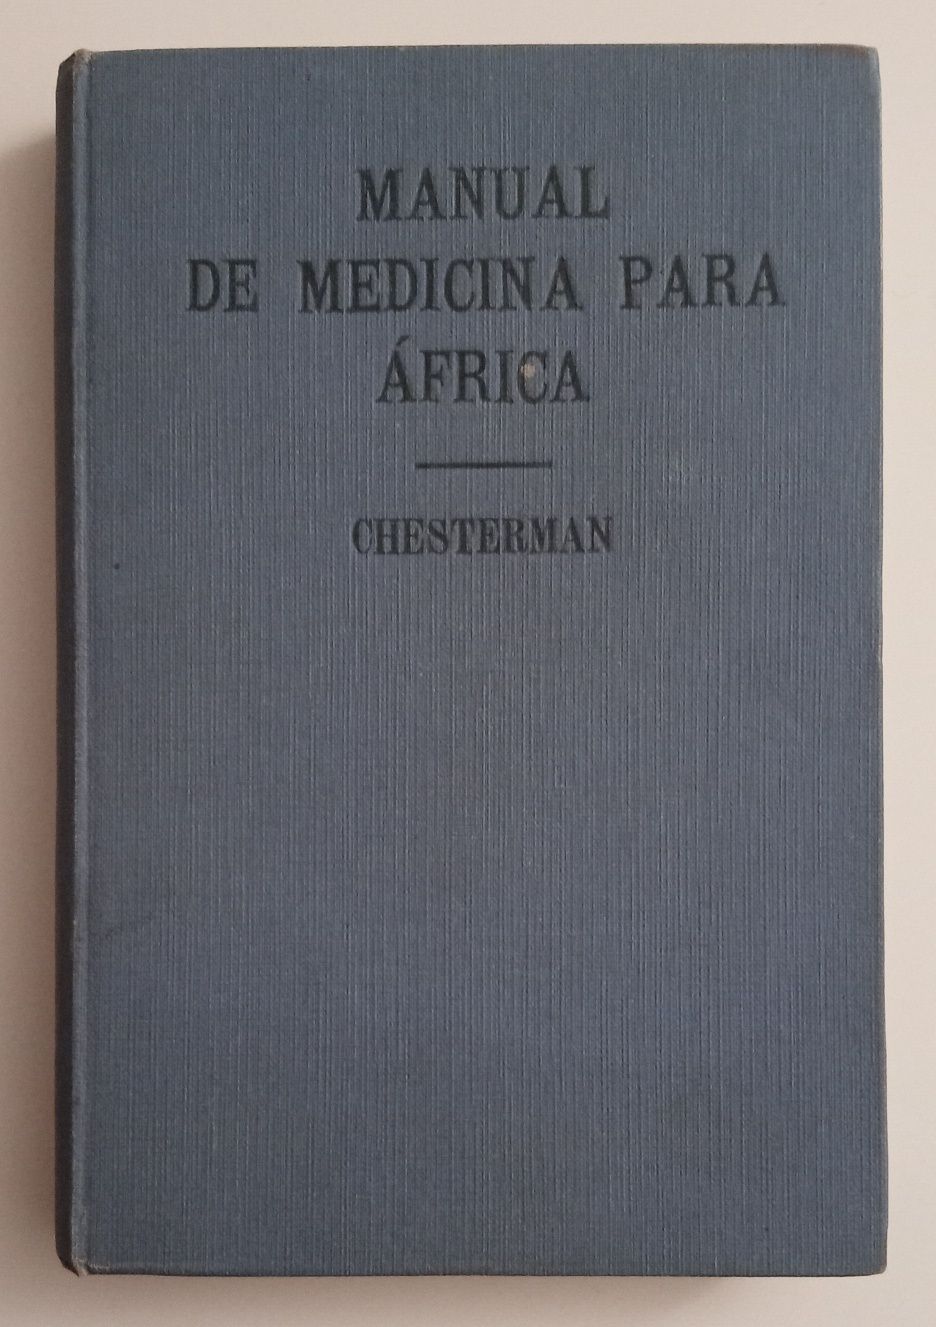 Manual de Medicina para África (C. C. Chesterman, 1936)